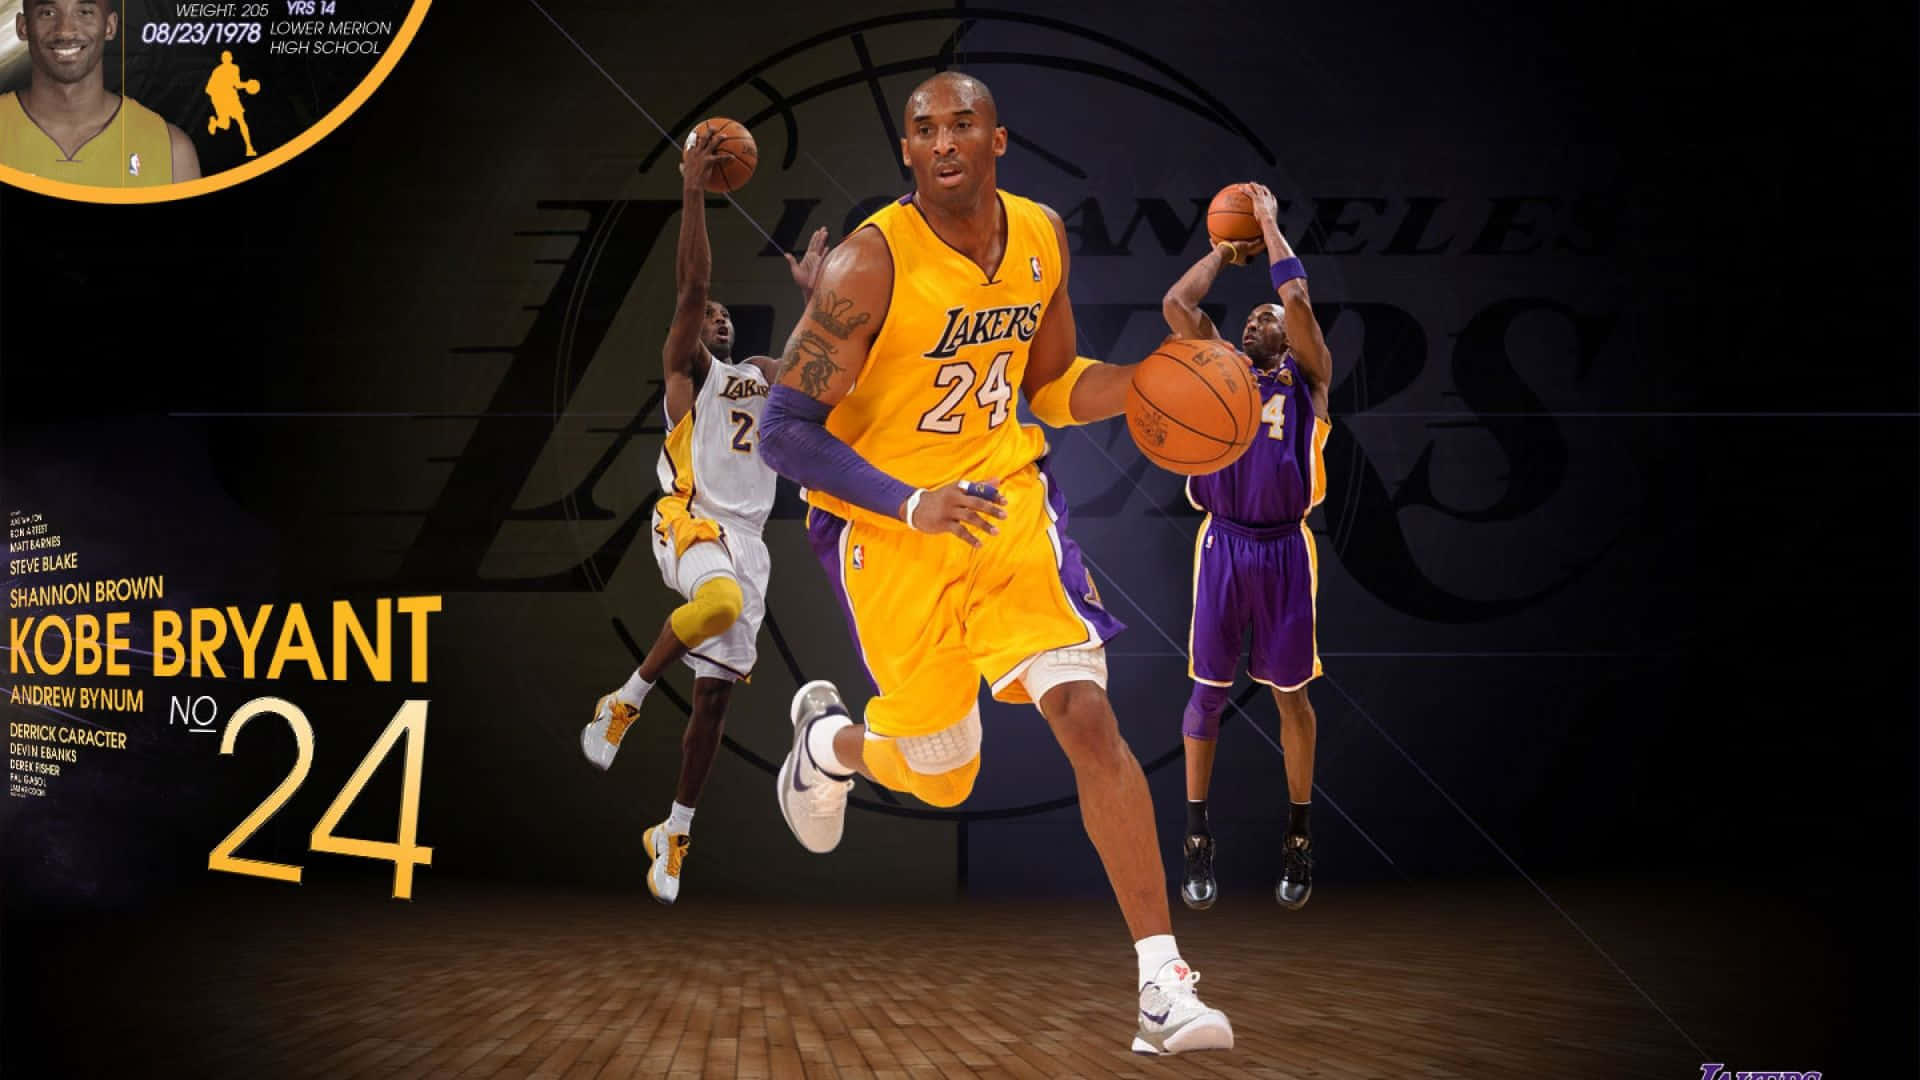 An Iconic Shot of Kobe Bryant